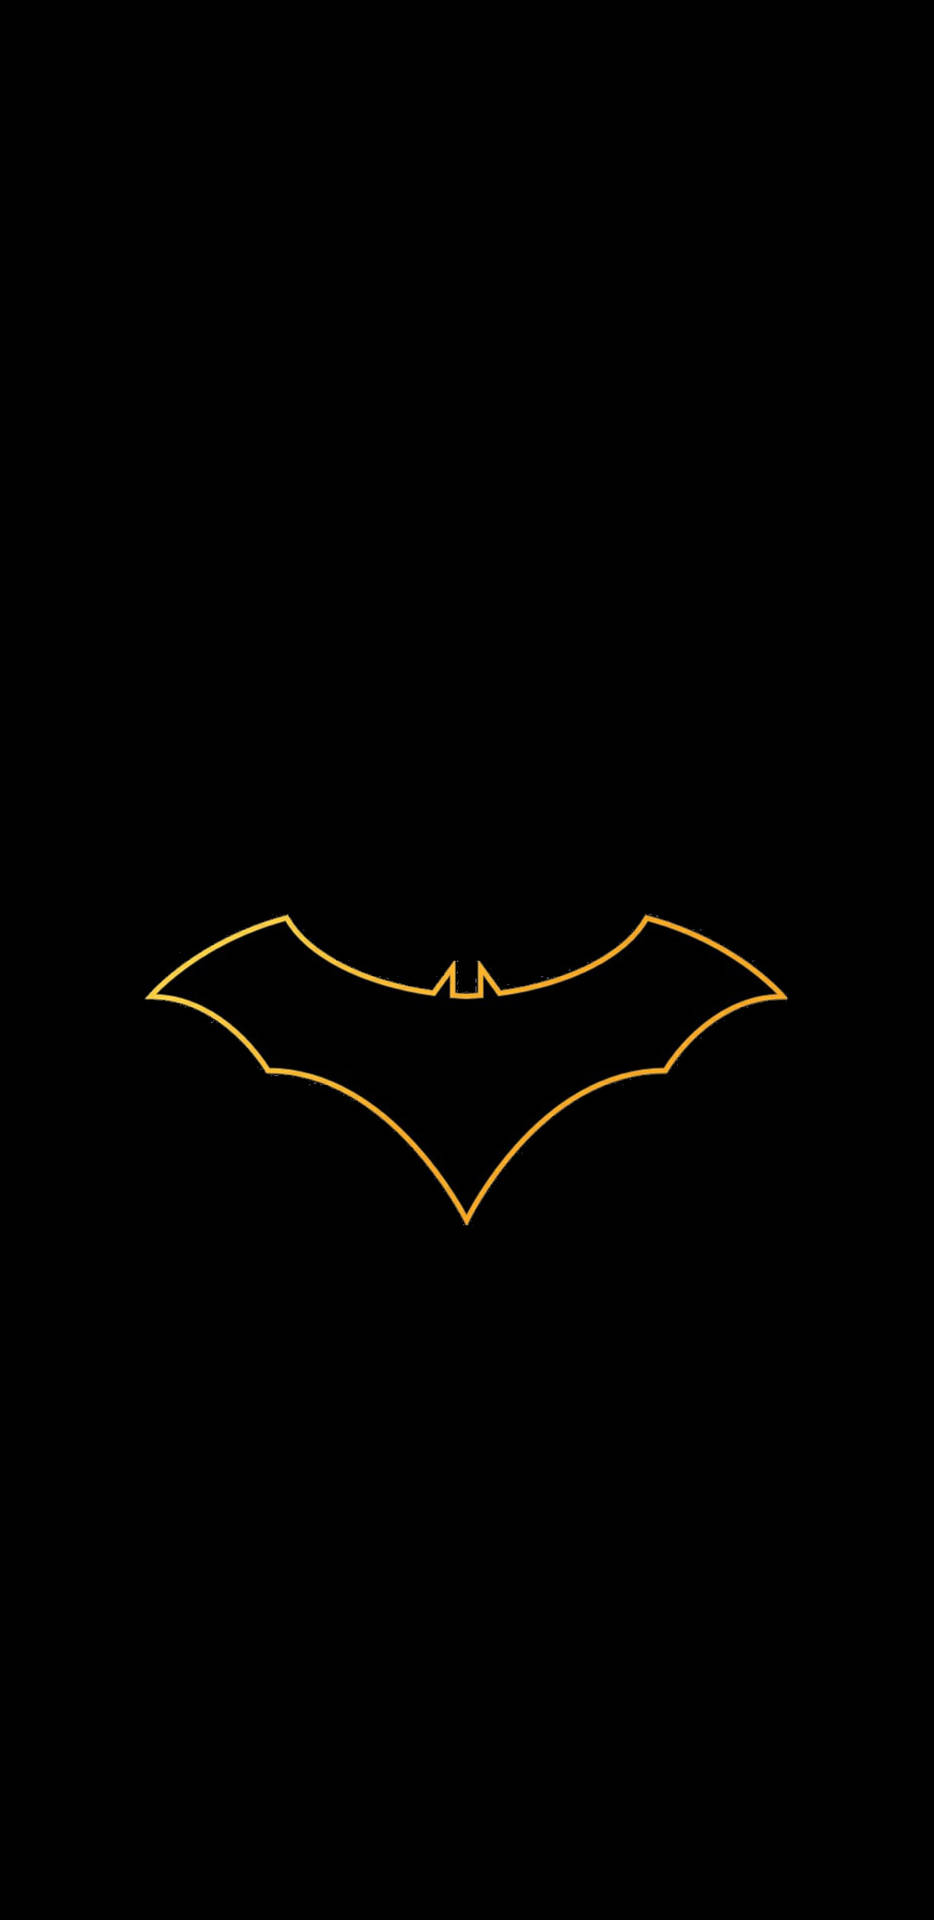 Pixel 3 Xl Batman Logo Wallpaper